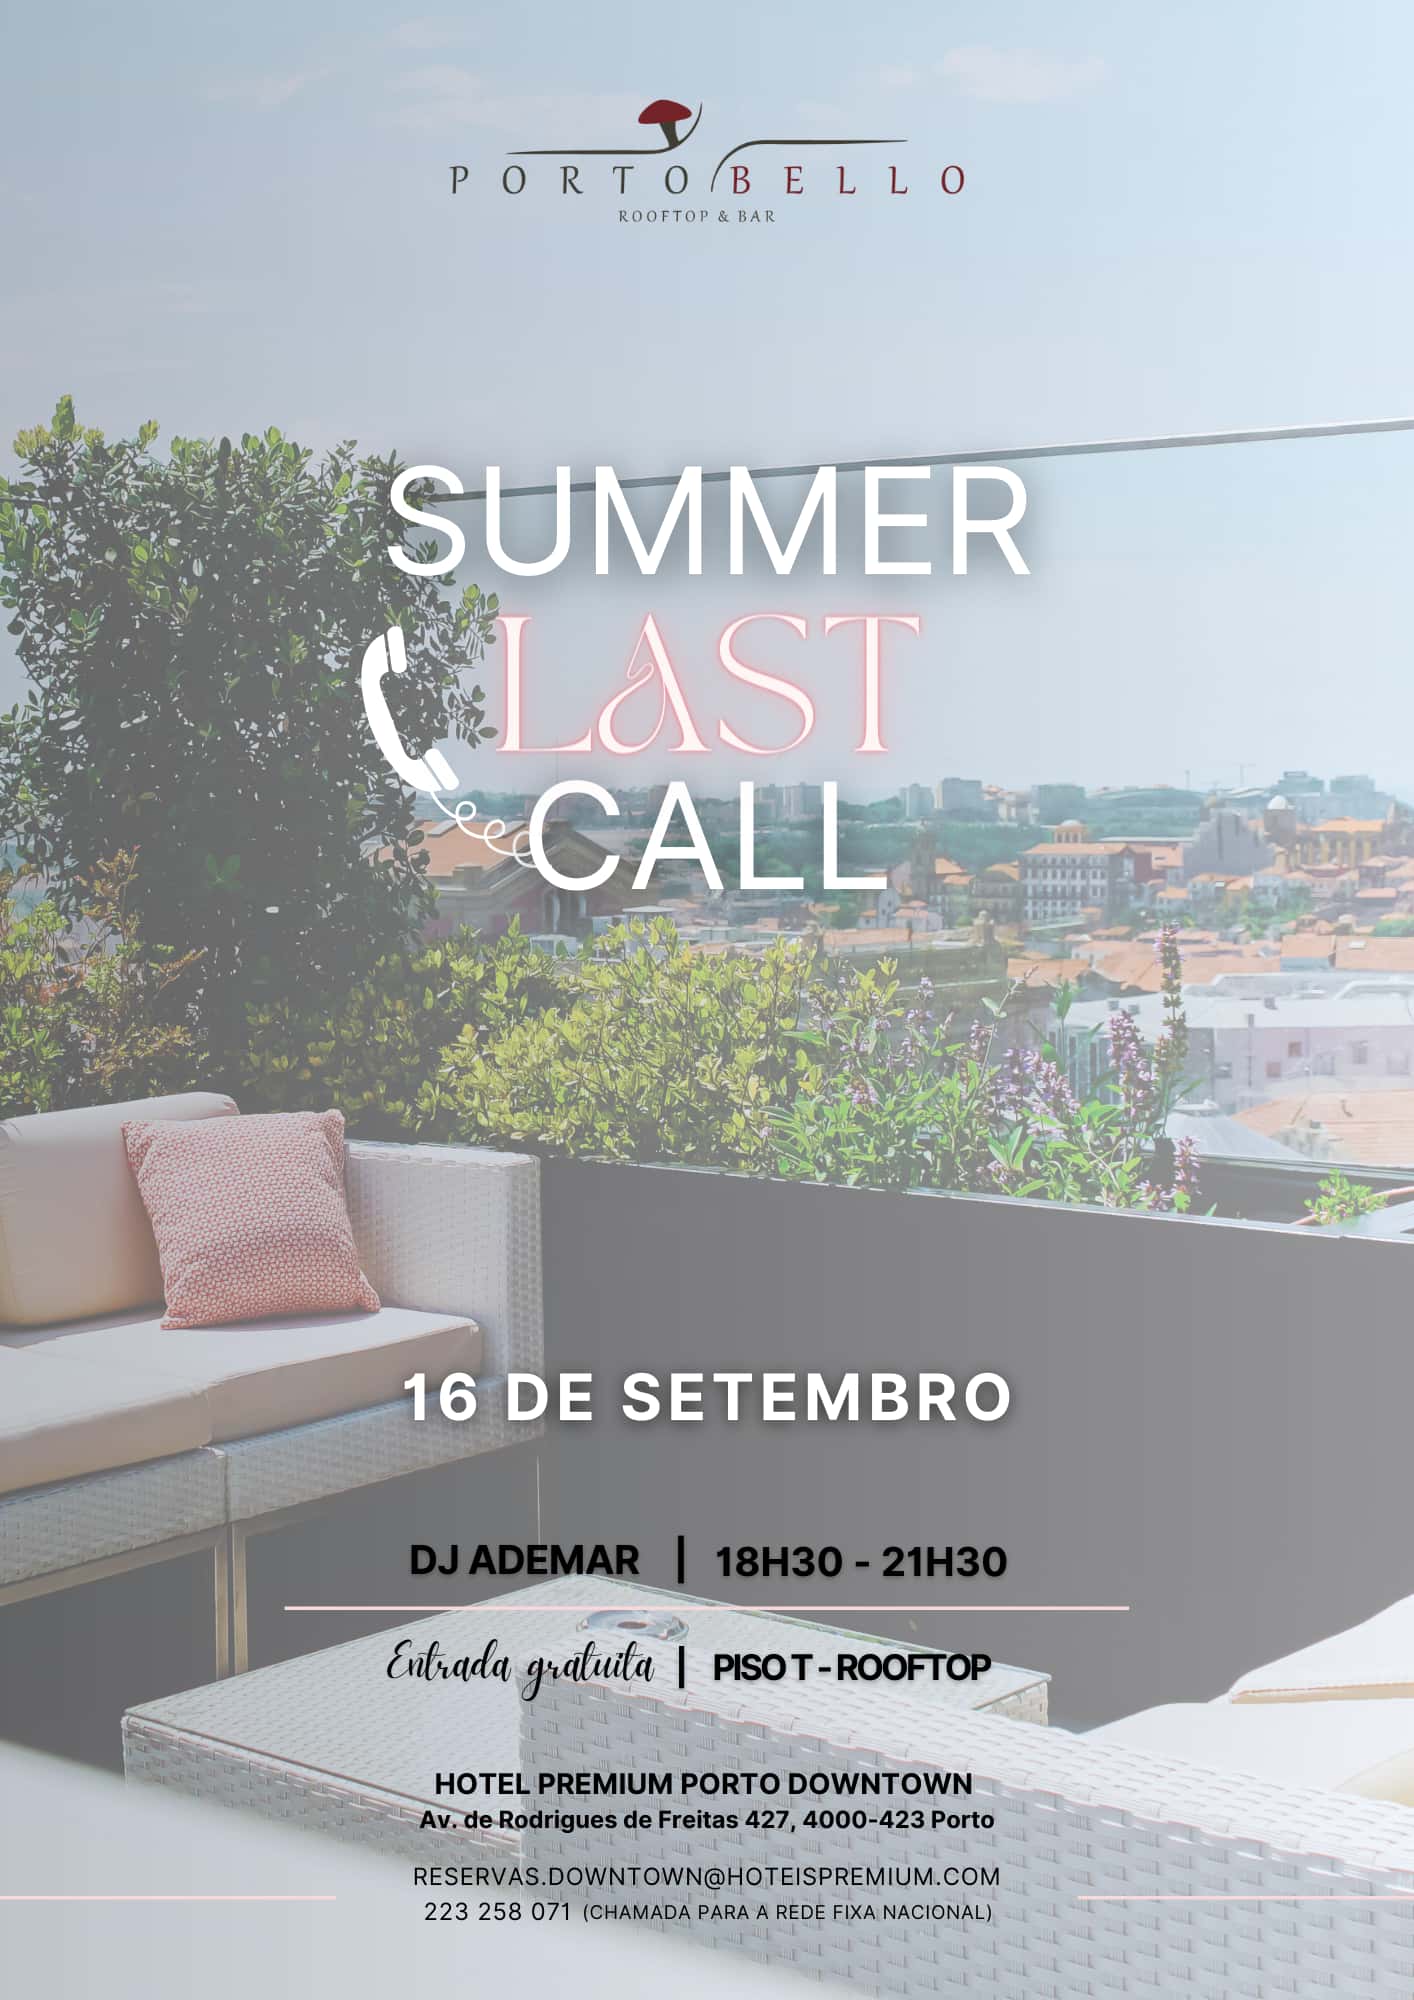 Summer Last Call - Portobello Rooftop & Bar